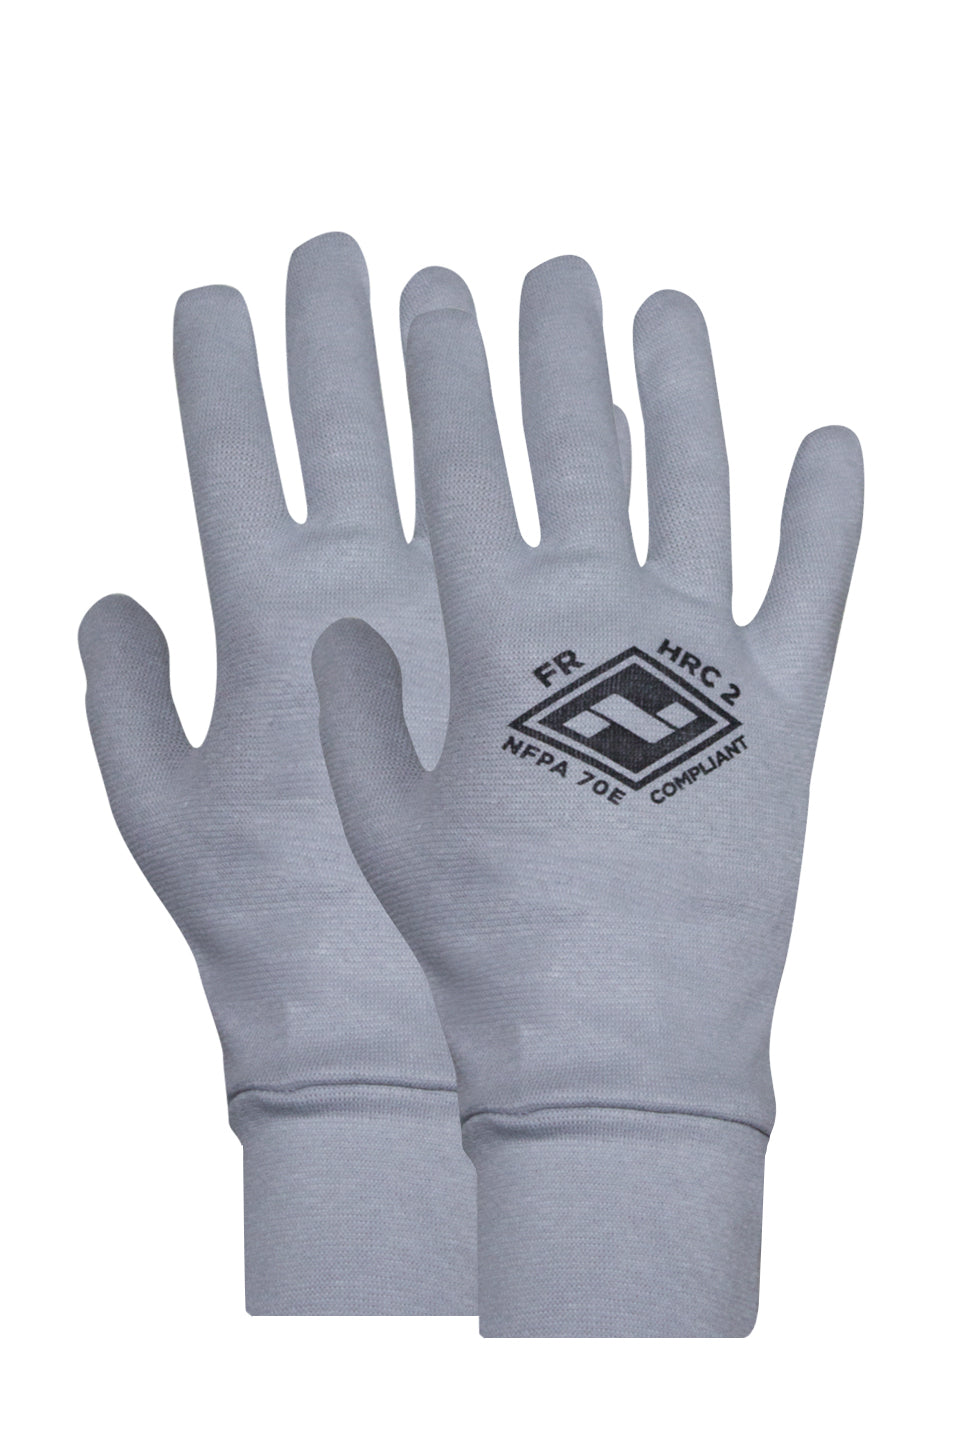 ArcGuard FR Knit Gloves